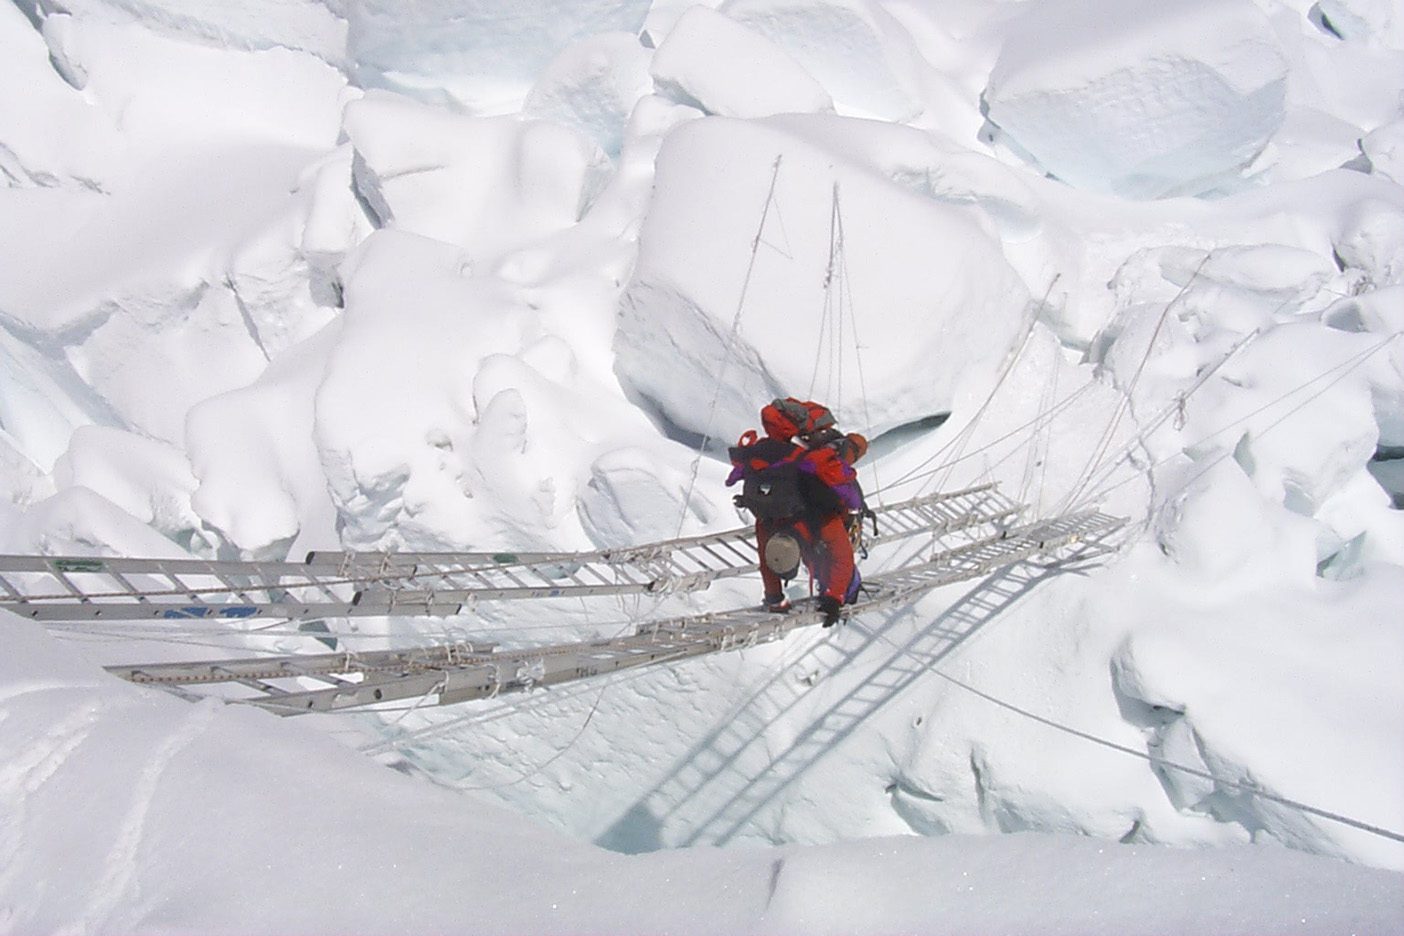 A climber crosses a ladder set across a giant crevasse on Everest.